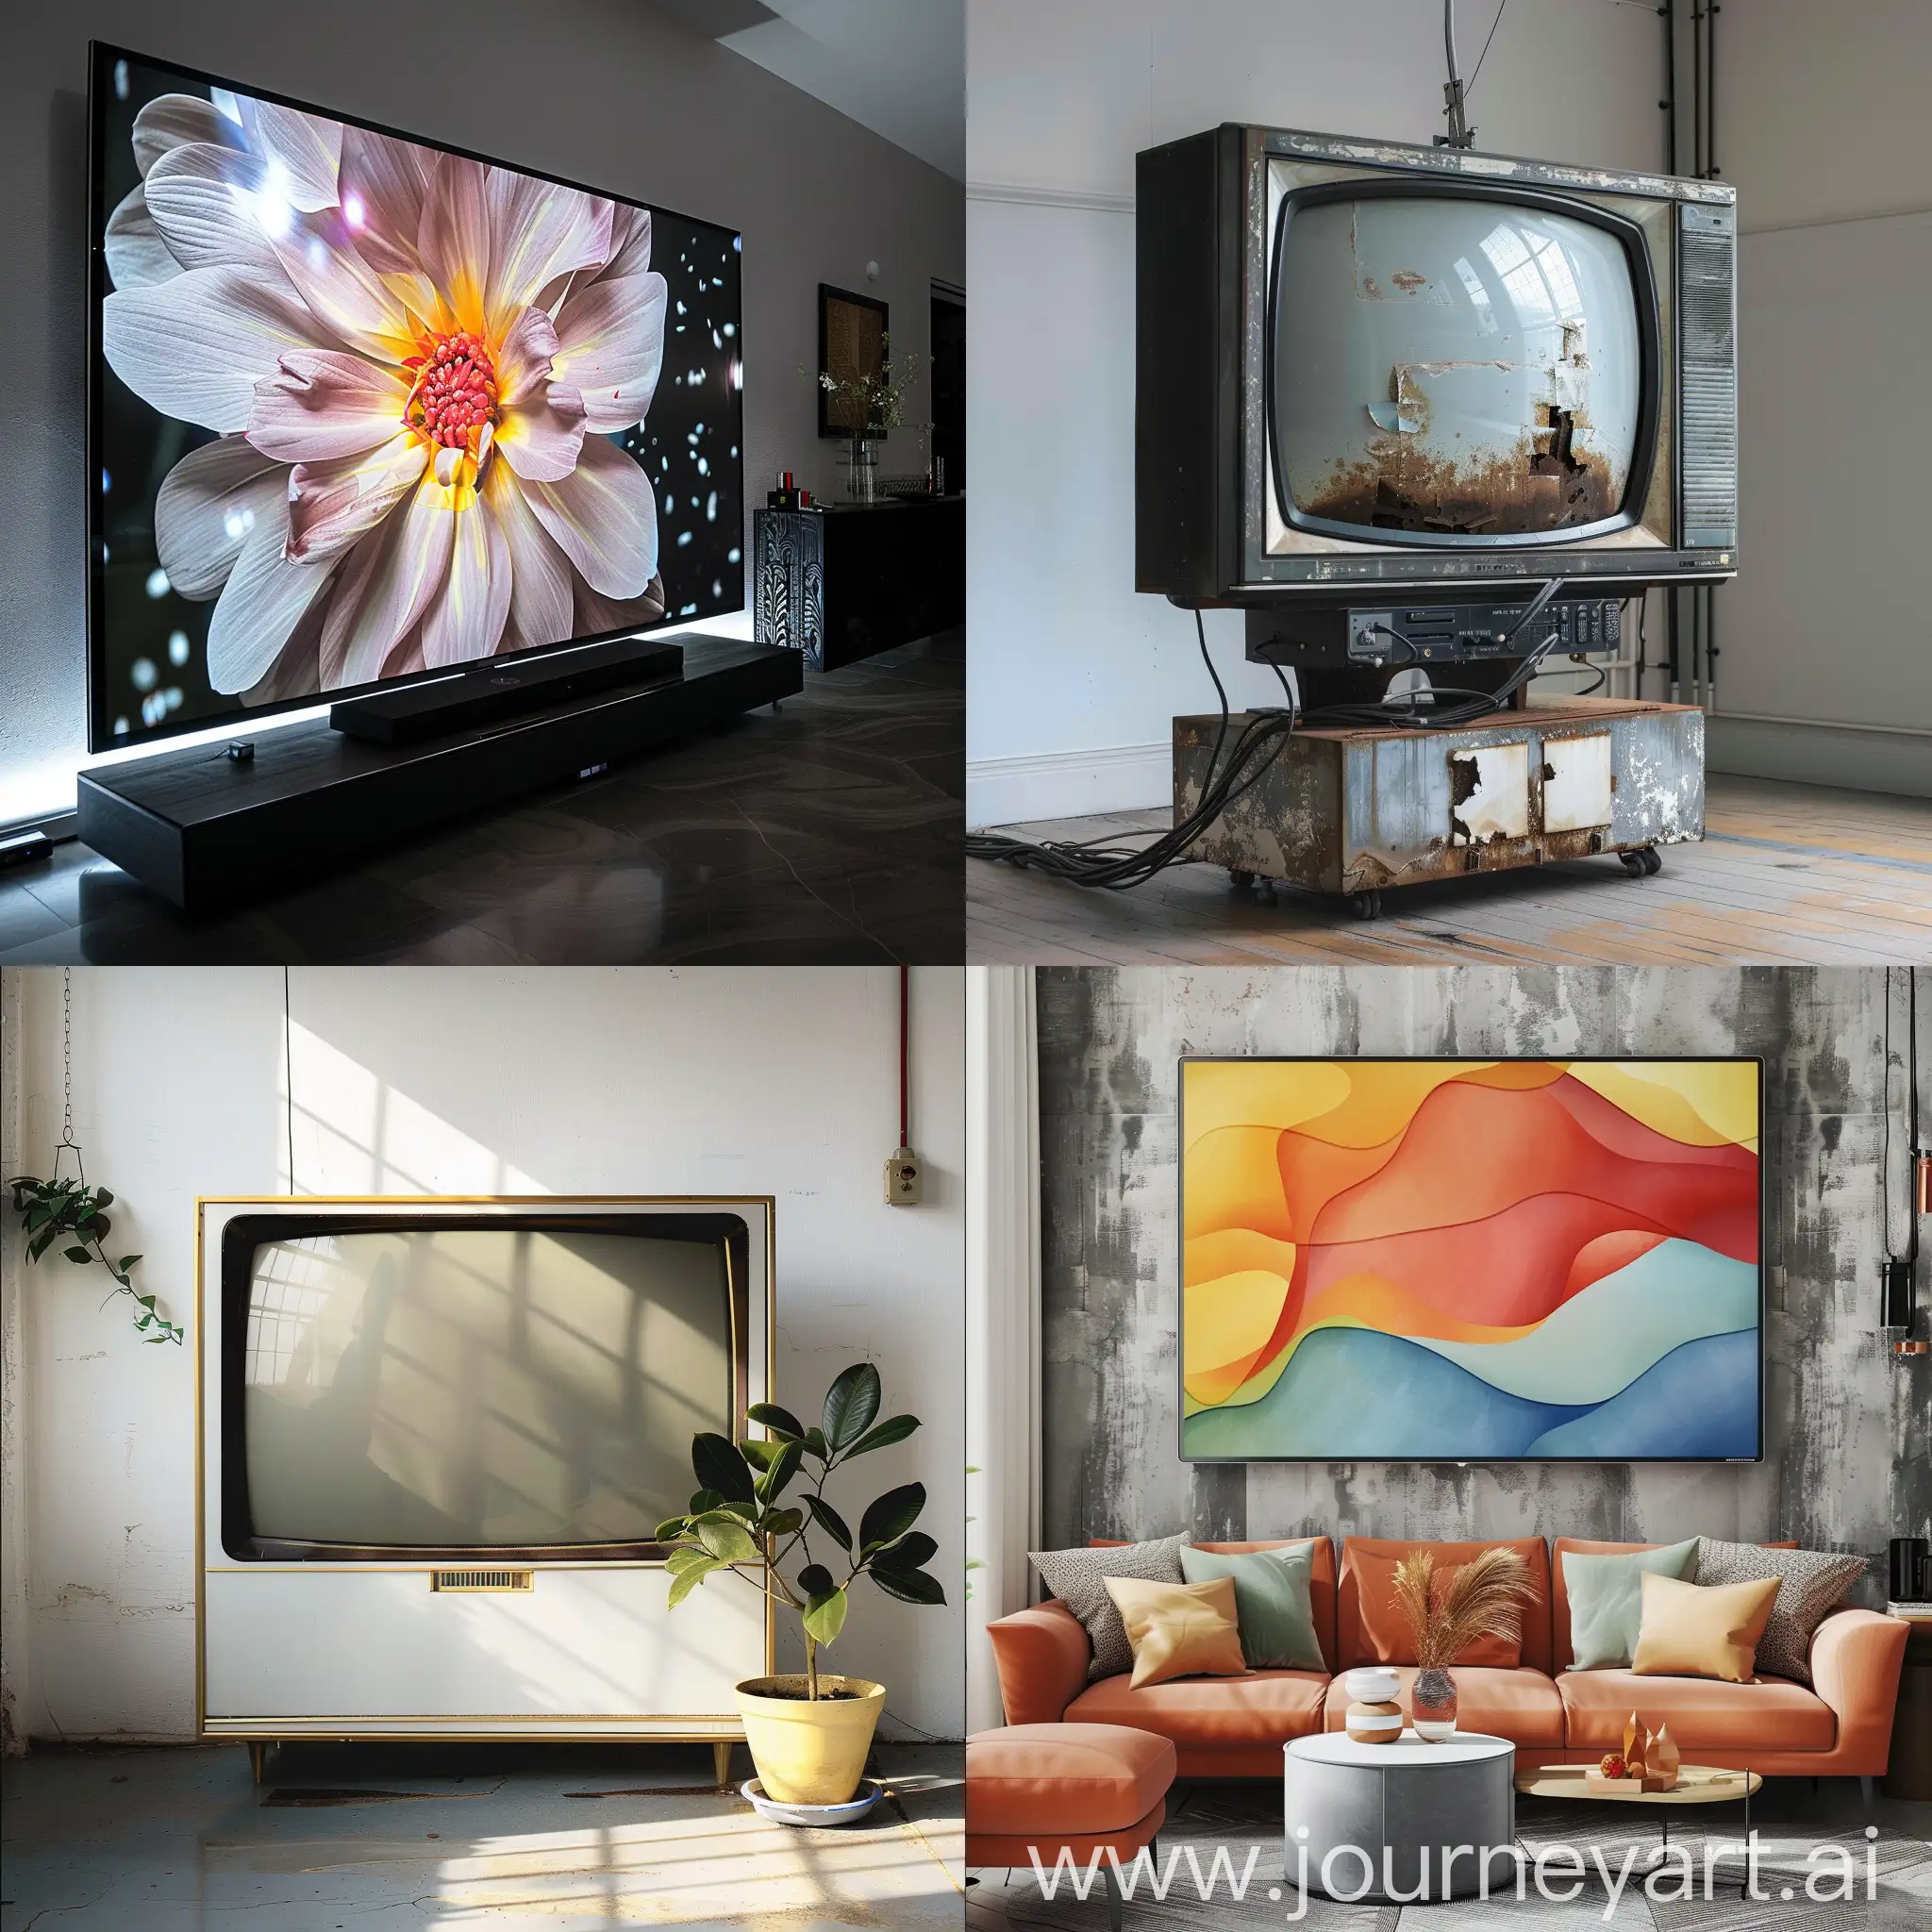 Vibrant-Television-Artwork-Displaying-Massiveness